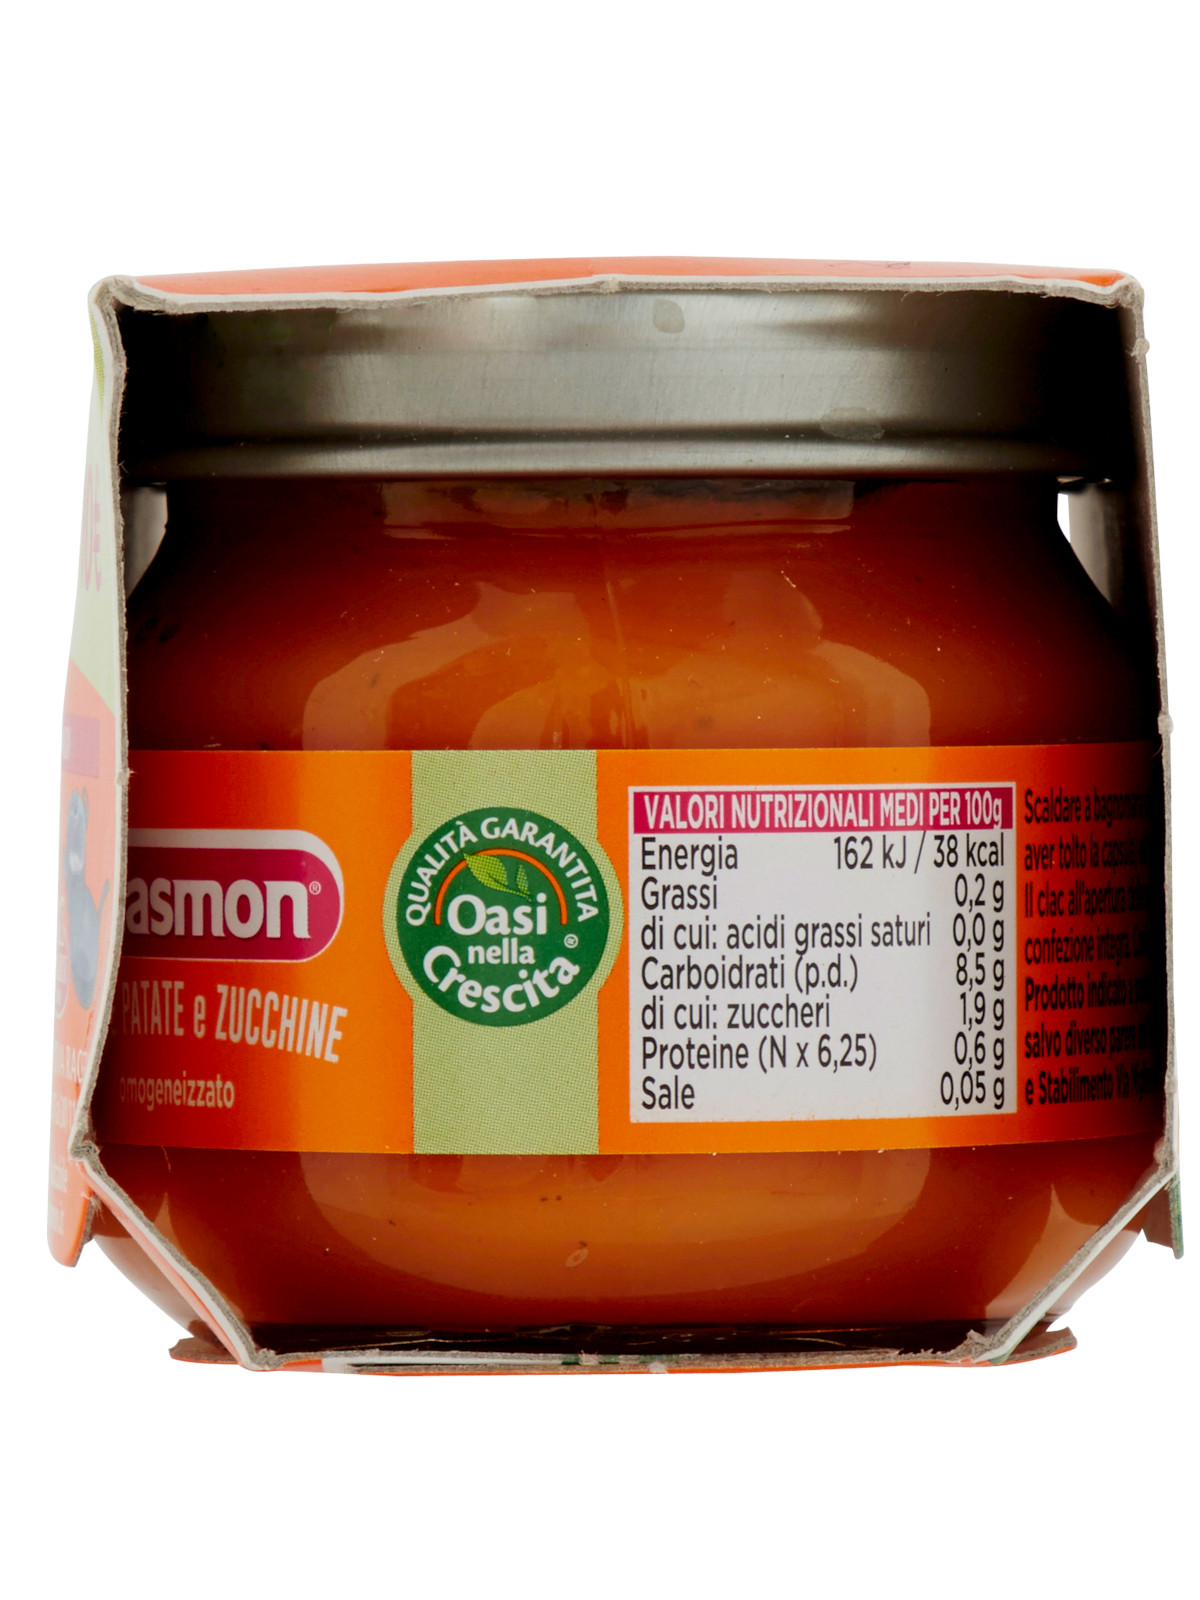 Plasmon - omogeneizzato carote, patate, zucchine - 2x80g - PLASMON